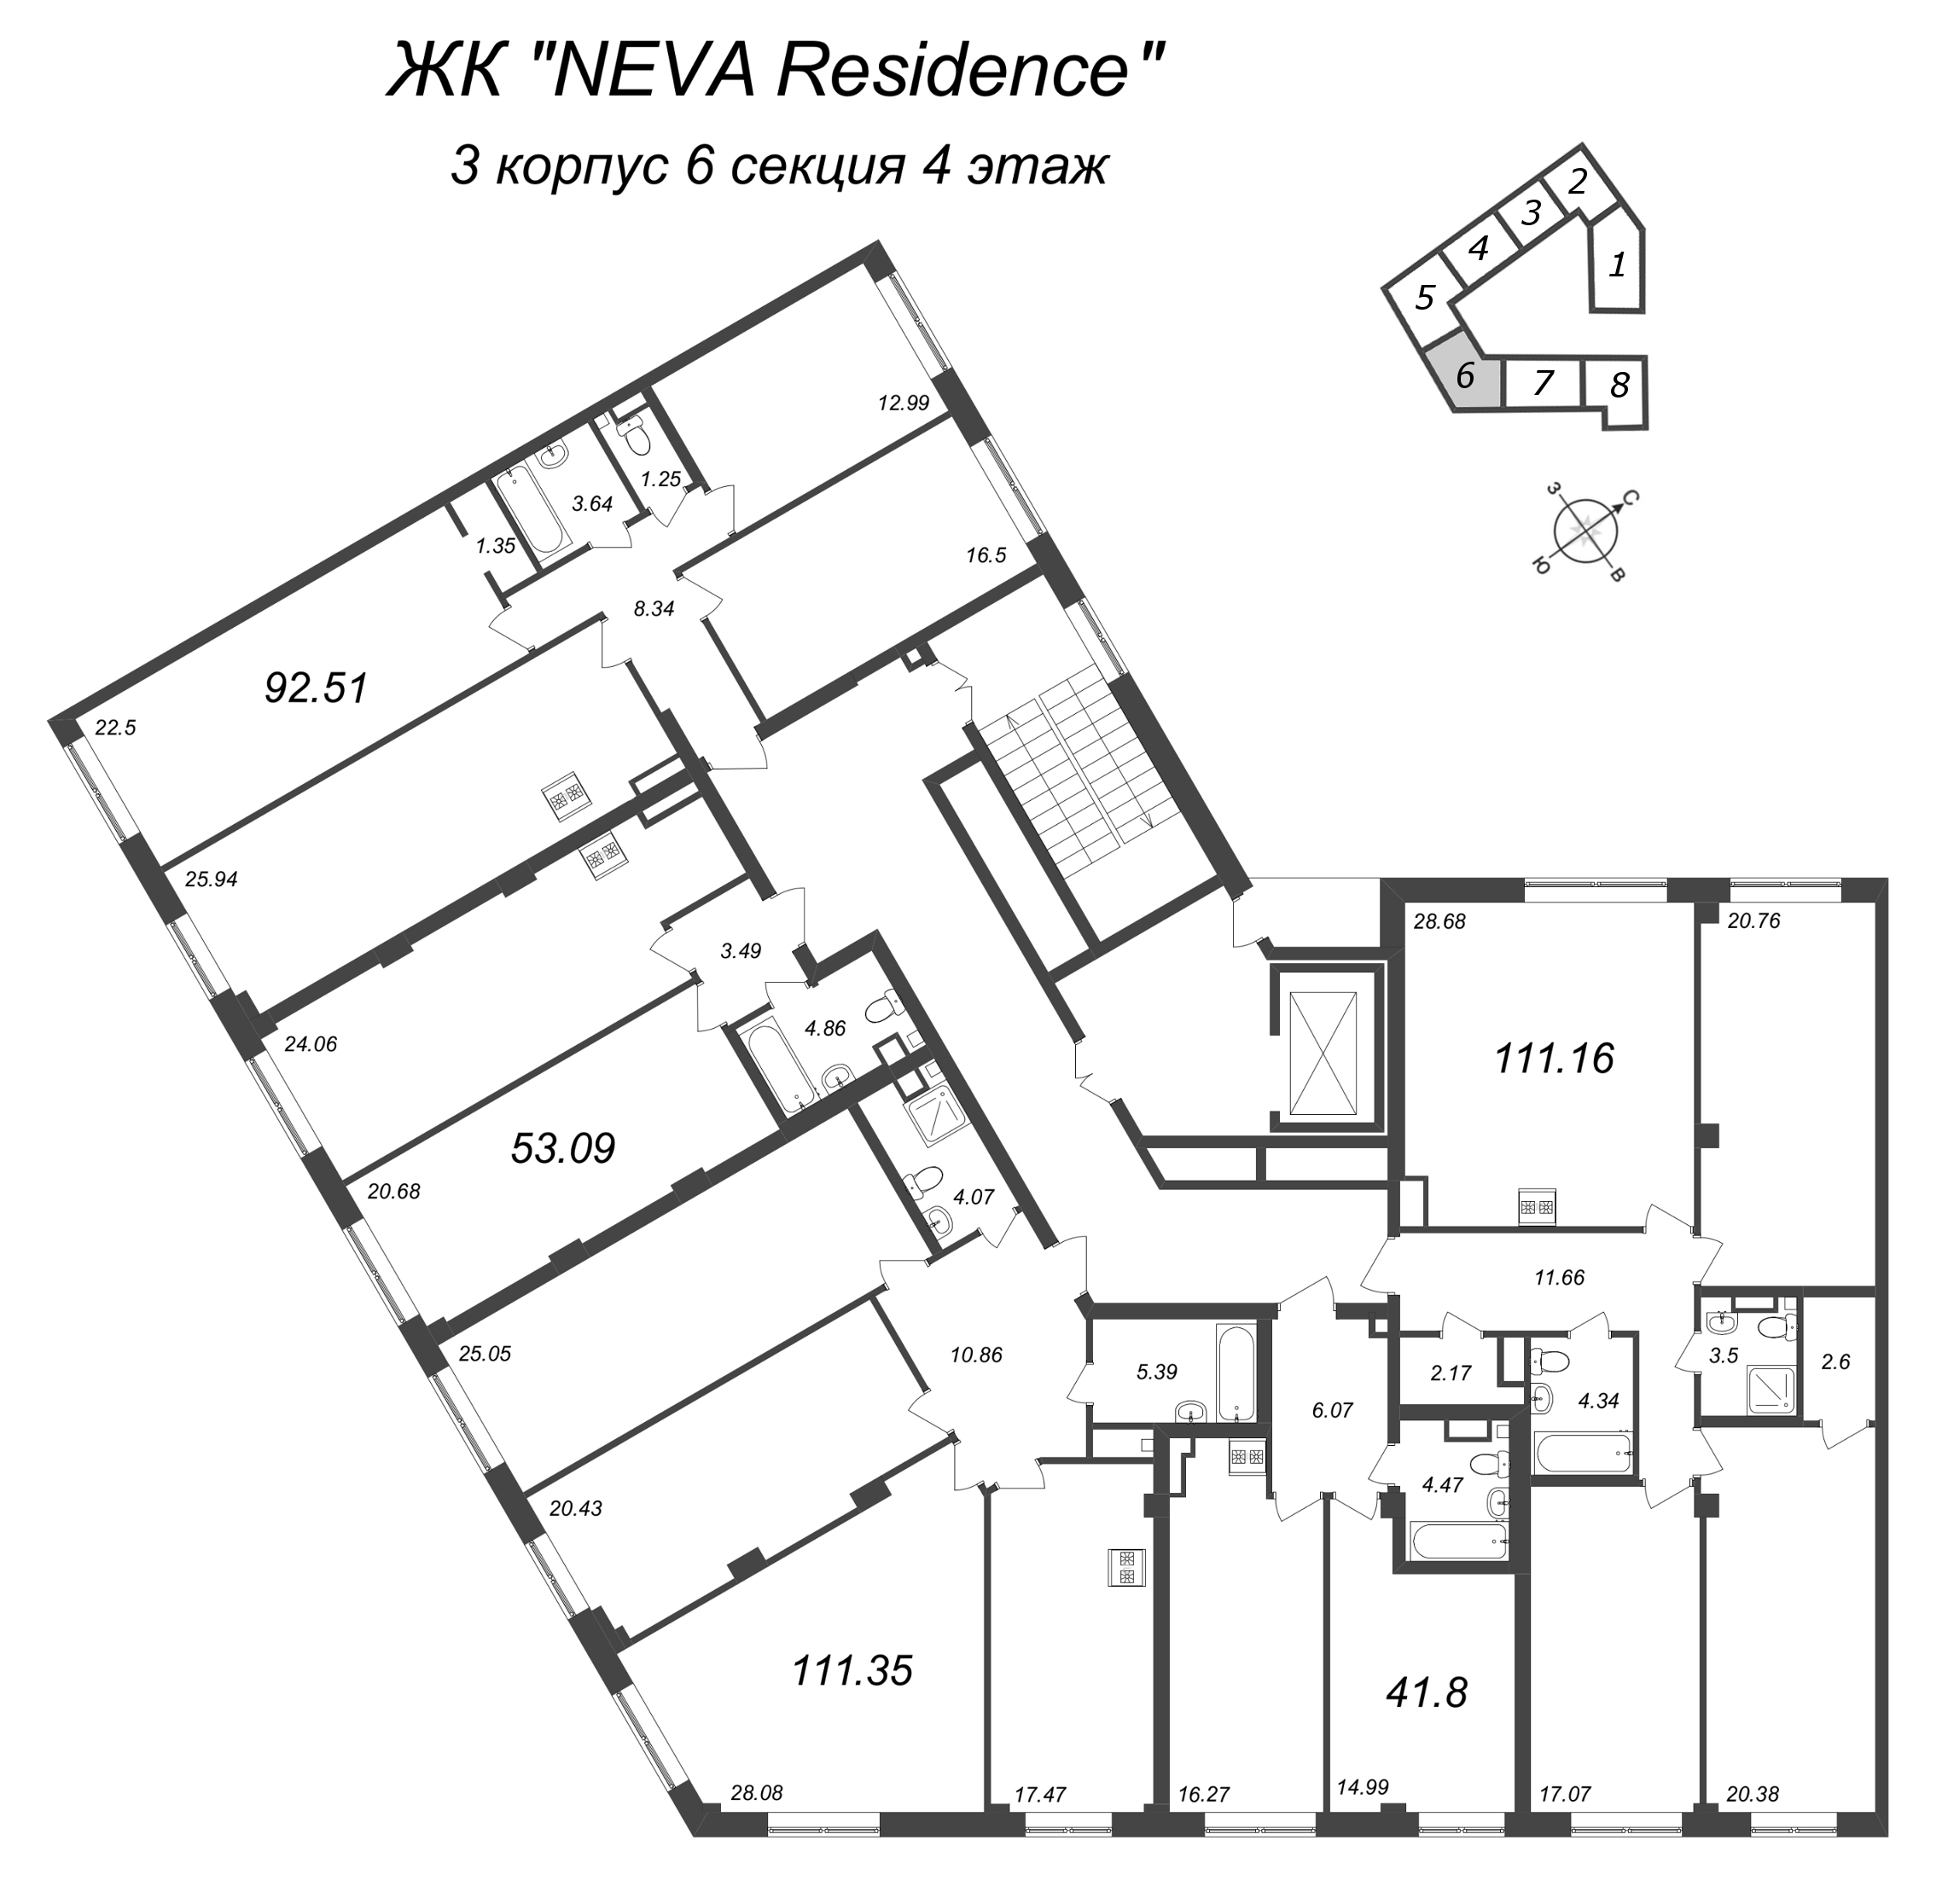 4-комнатная (Евро) квартира, 92.51 м² - планировка этажа